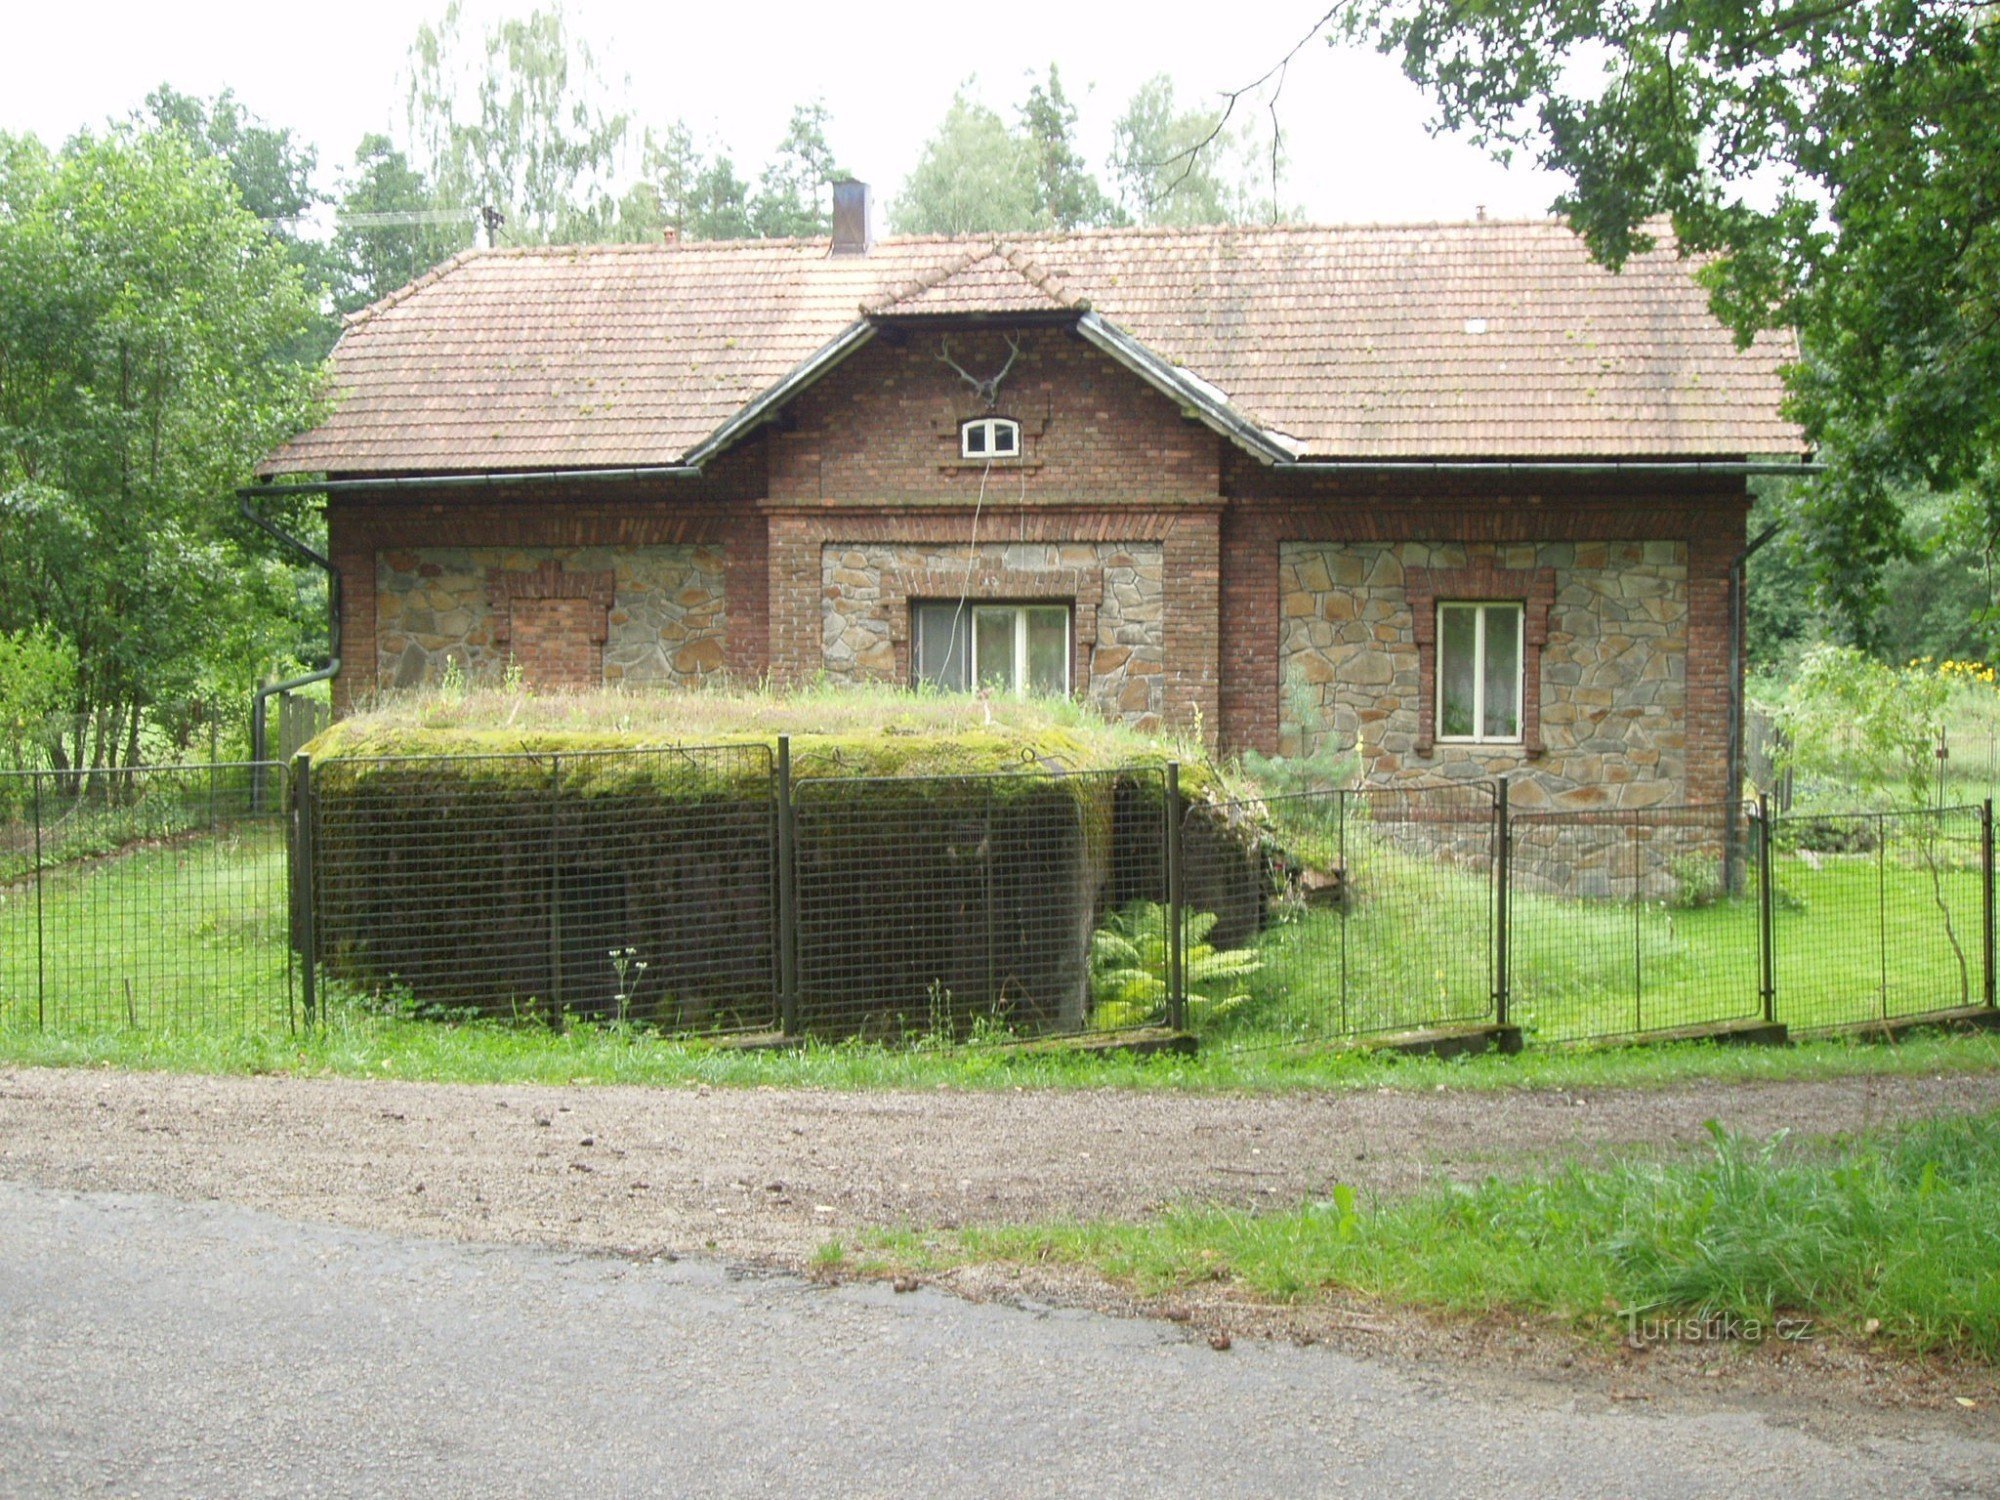 Light fortification "ŘOPÍK" in the garden of the game reserve in the locality of Purkrabí near Chlum near Třeboň